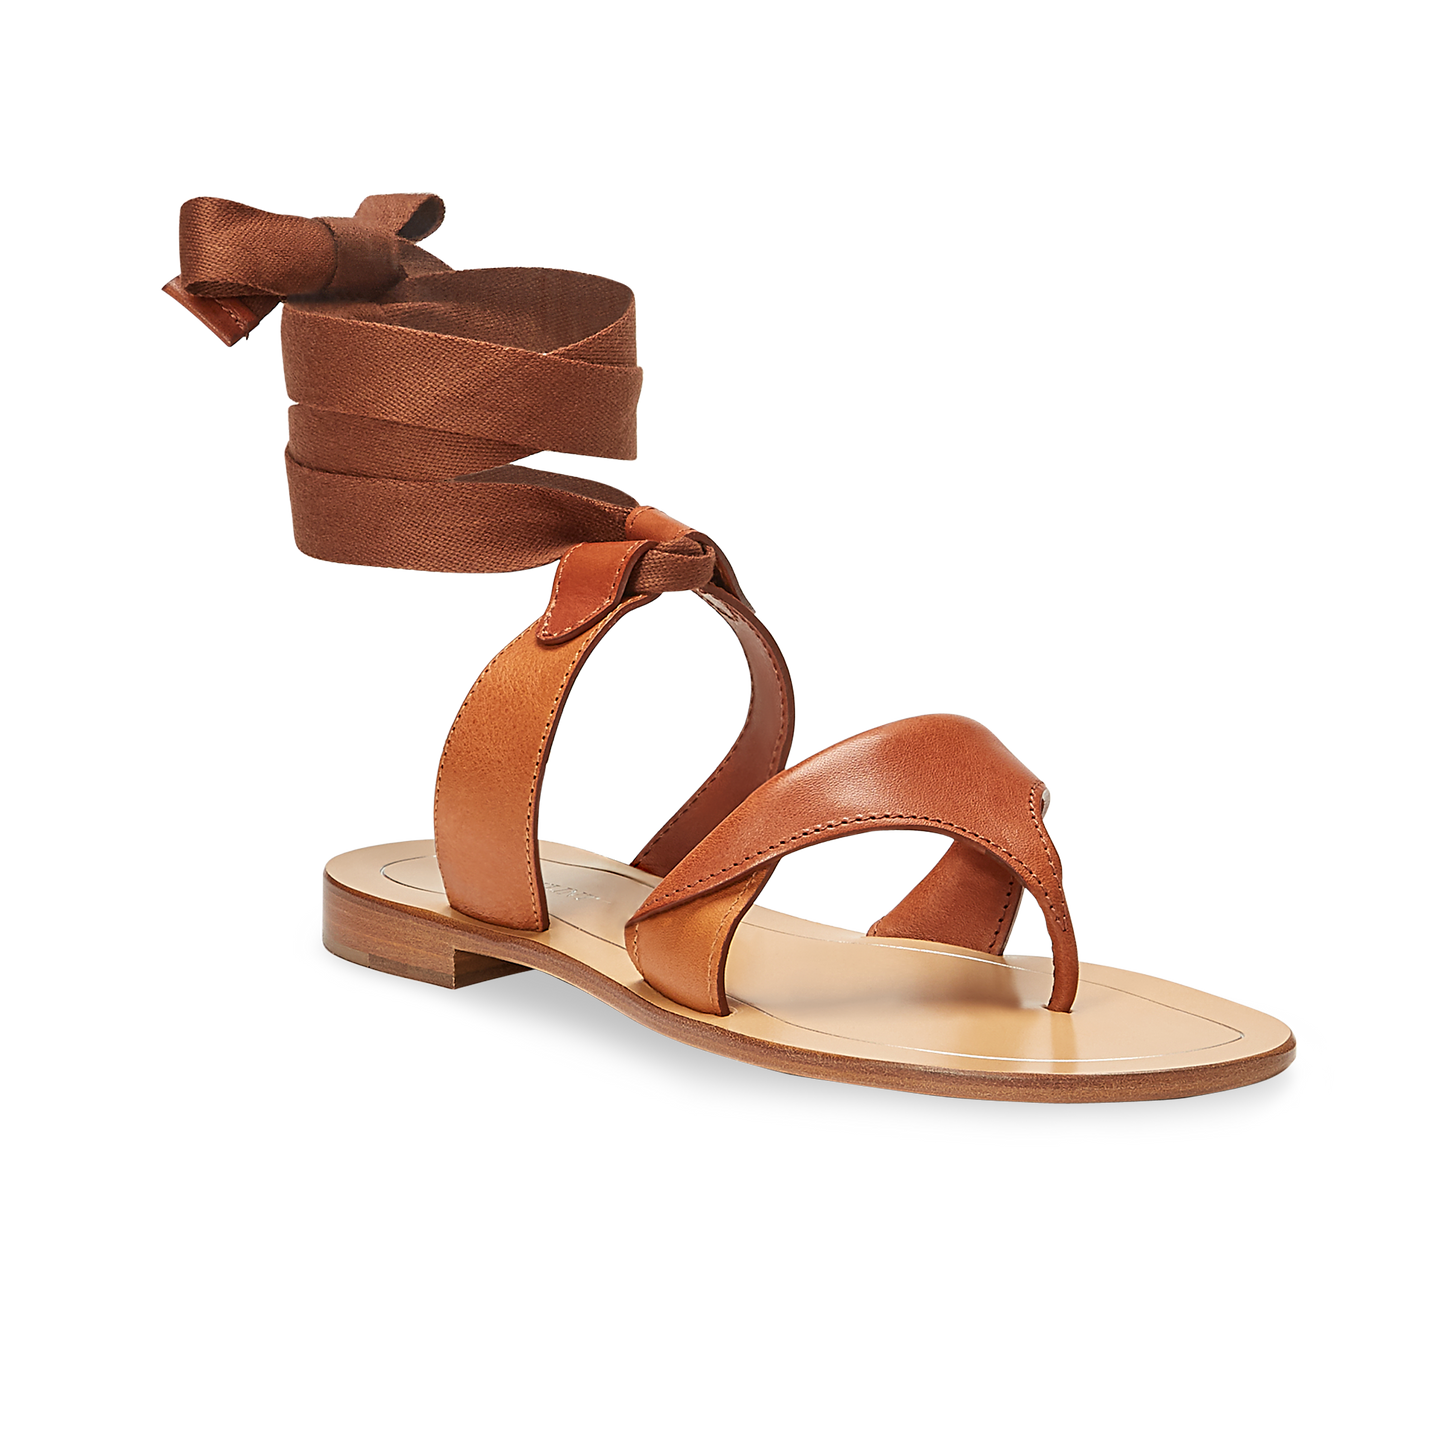 10mm Italian Made Flat Grear Sandal in Saddle Vachetta